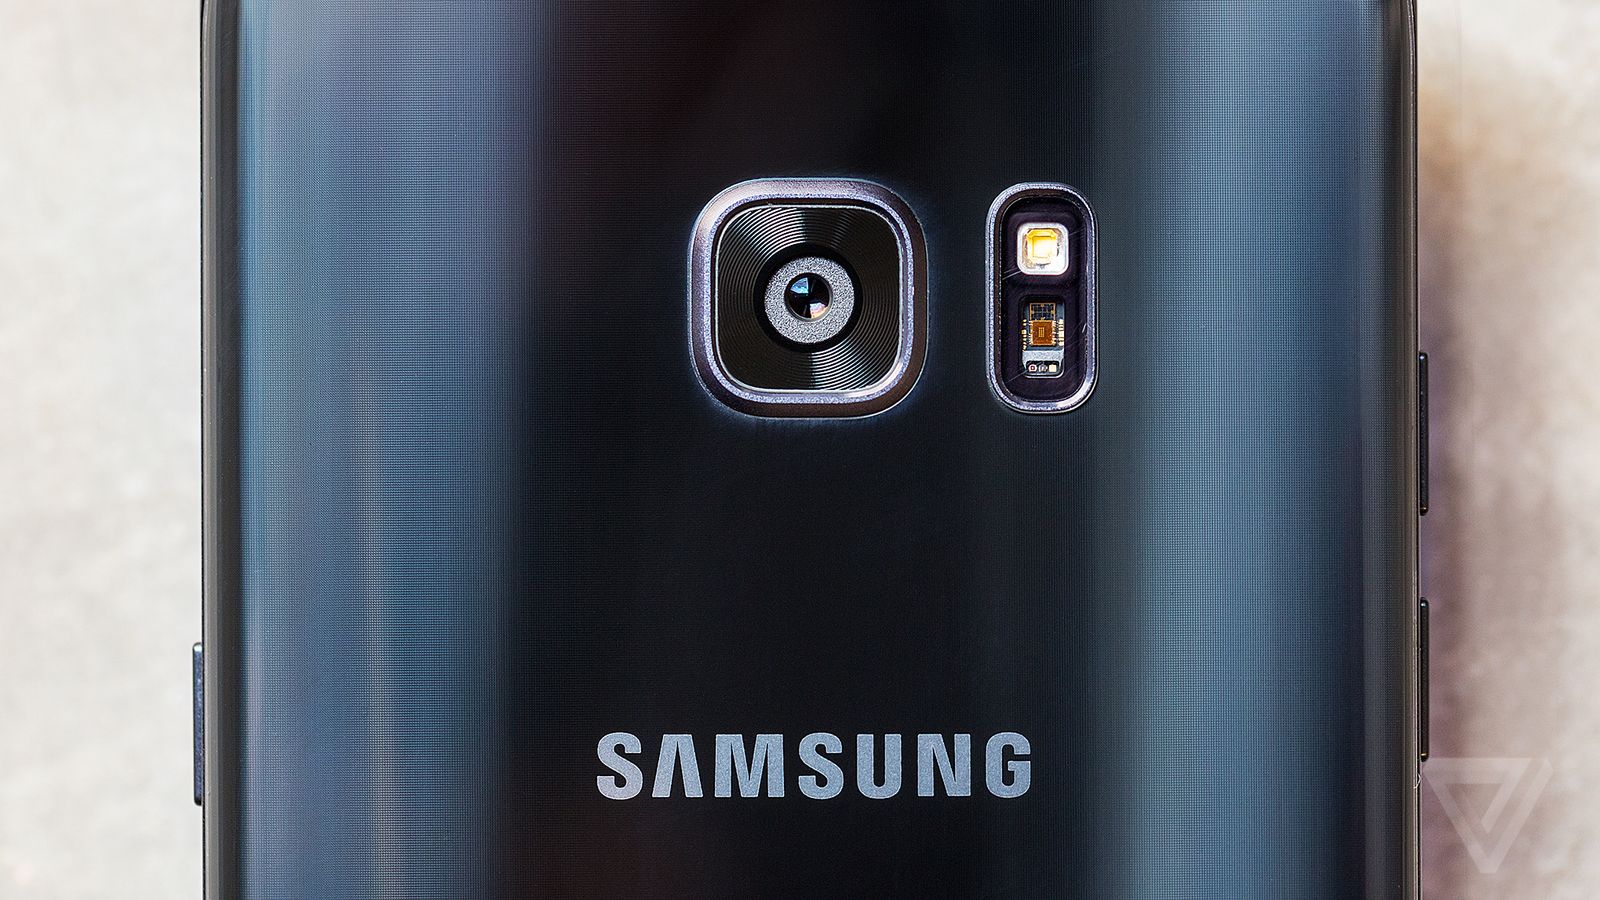 Samsung's halt of Galaxy Note 7 hurt third-quarter GDP: finance ministry official